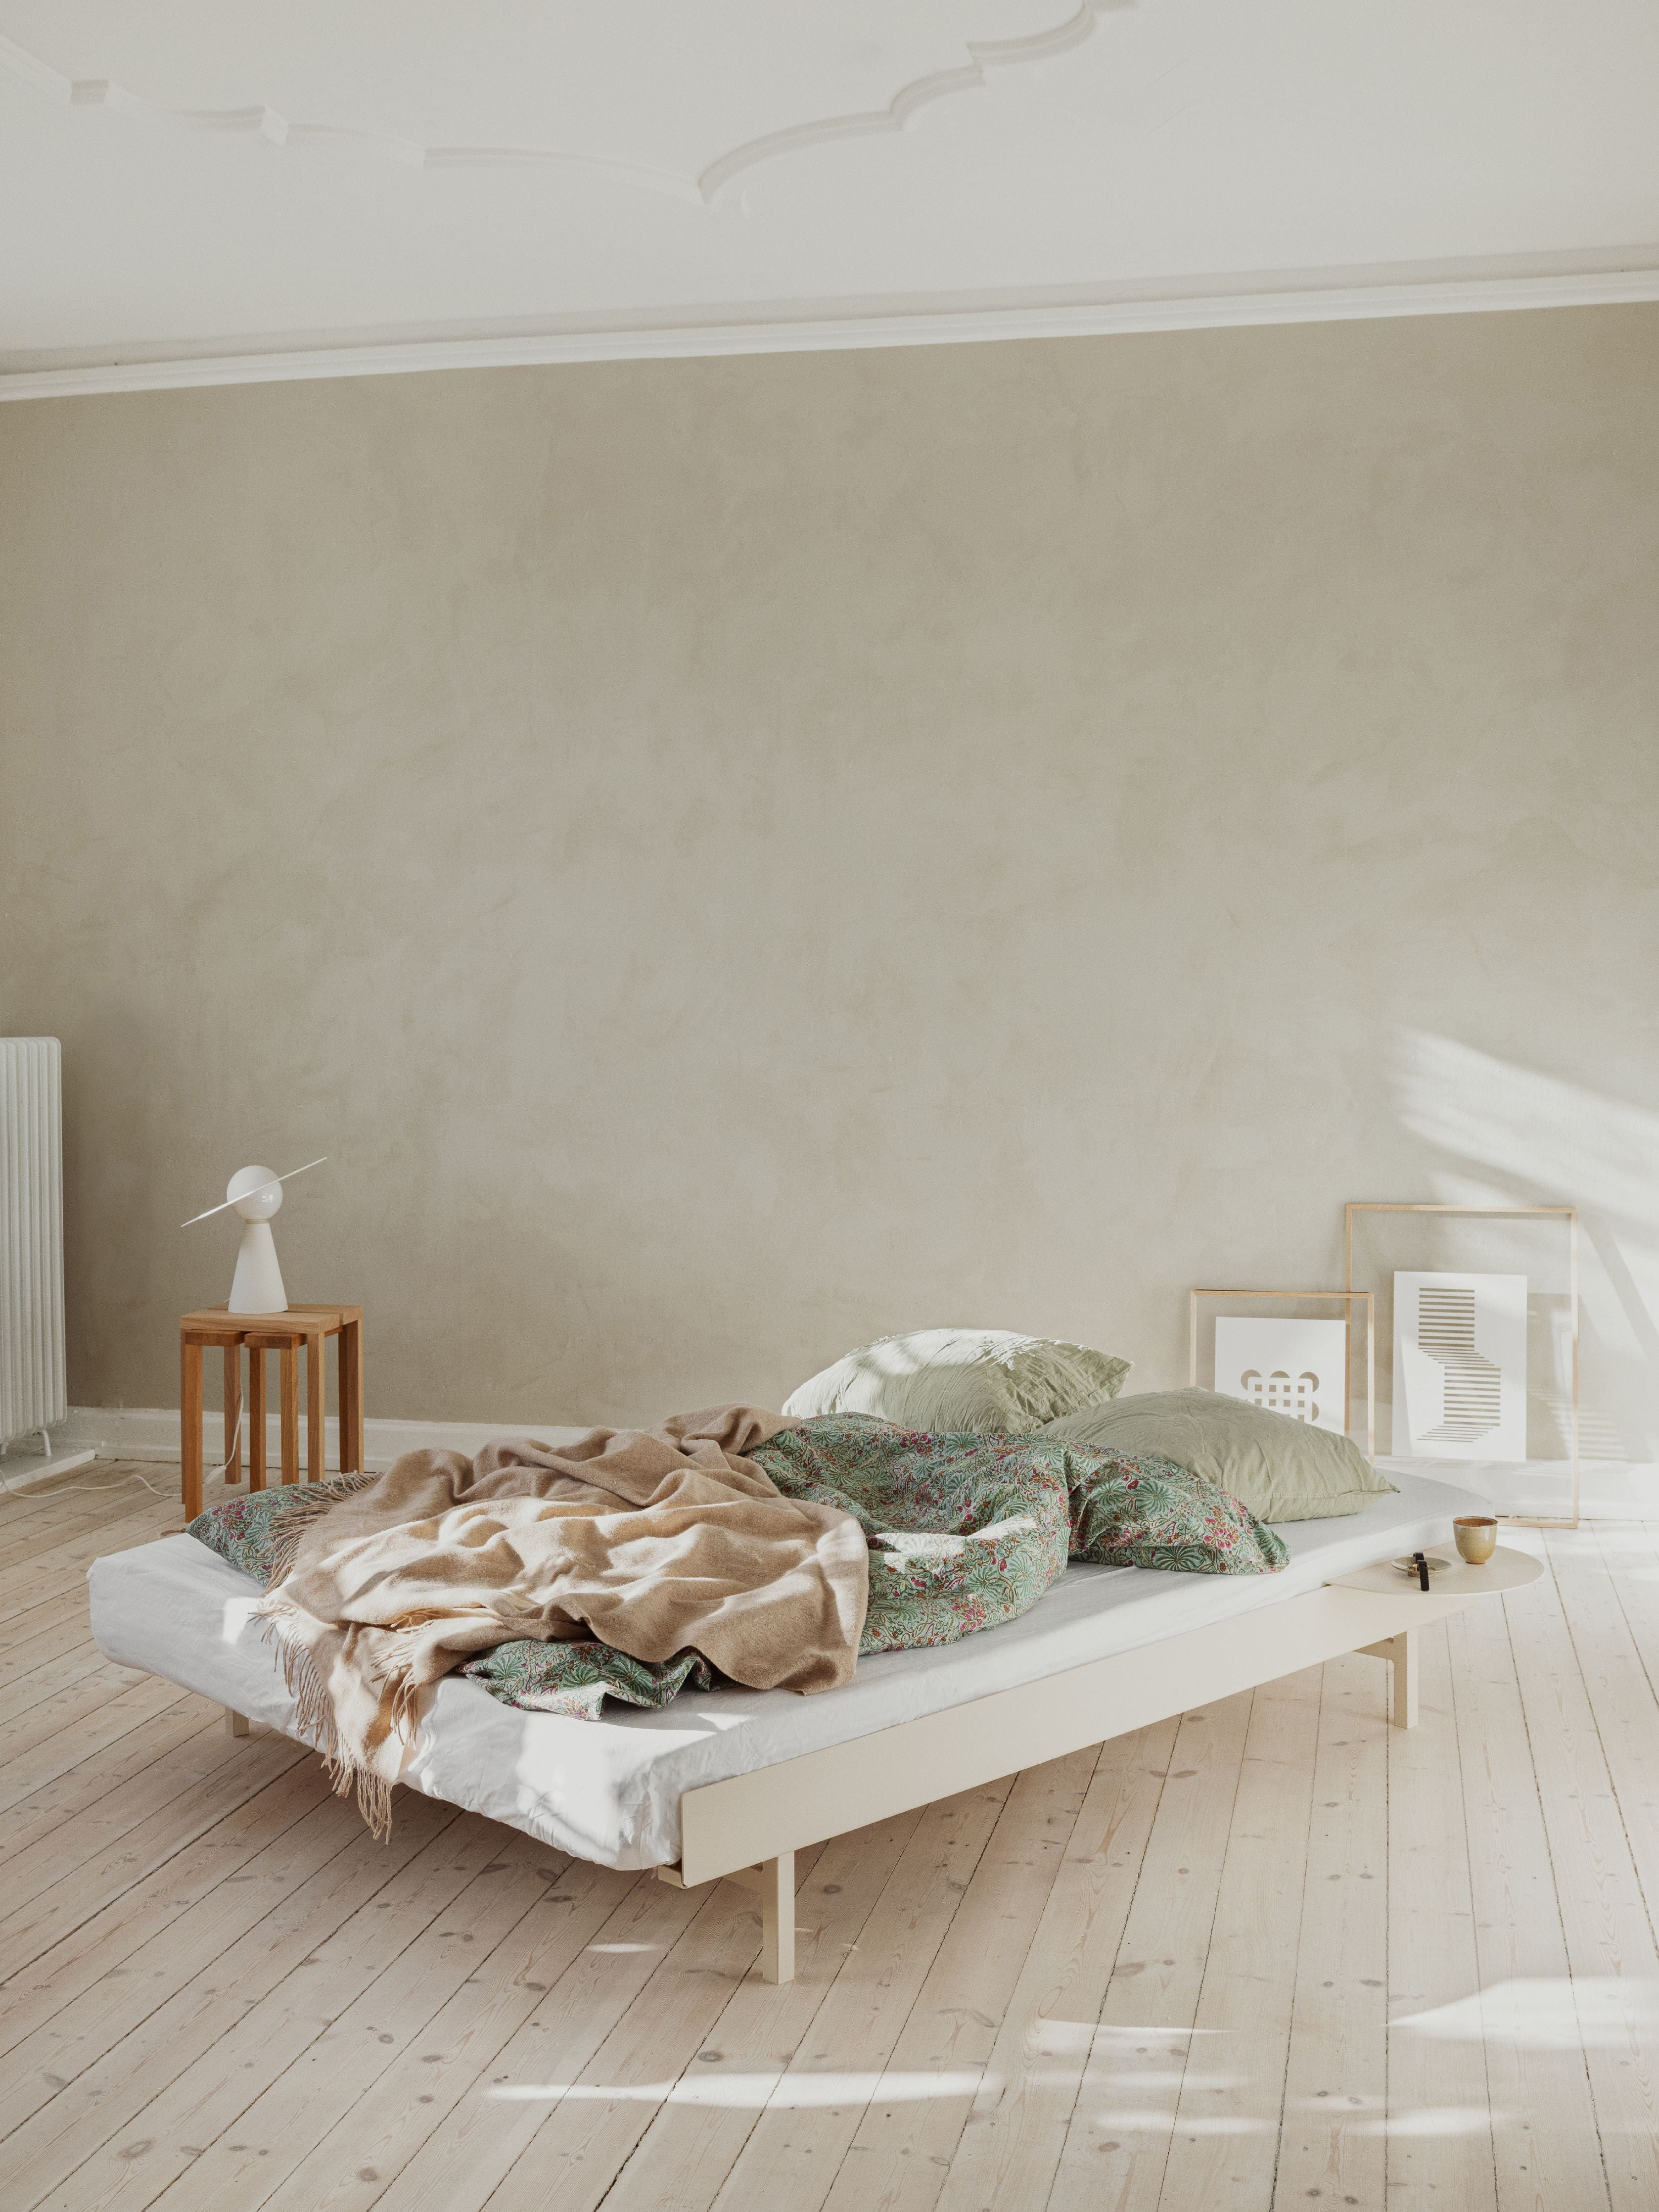 Moebe -säng med 1 sängbord 90 180 cm, sand